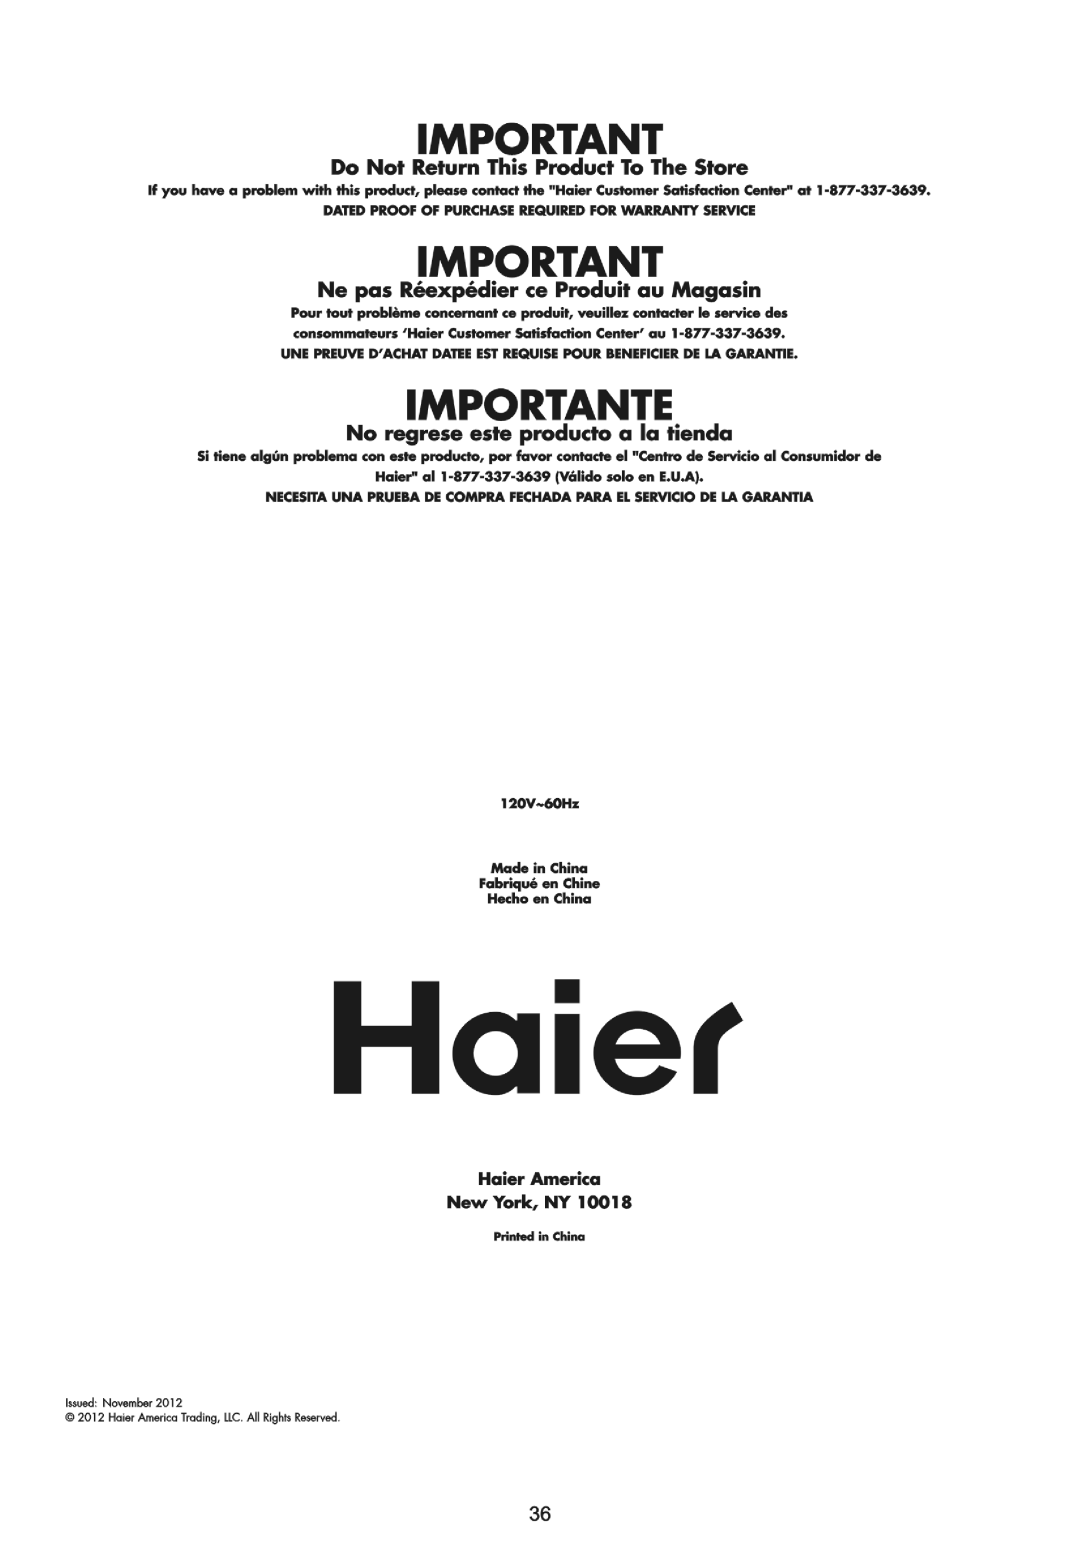 Haier HPD10XCM manual 